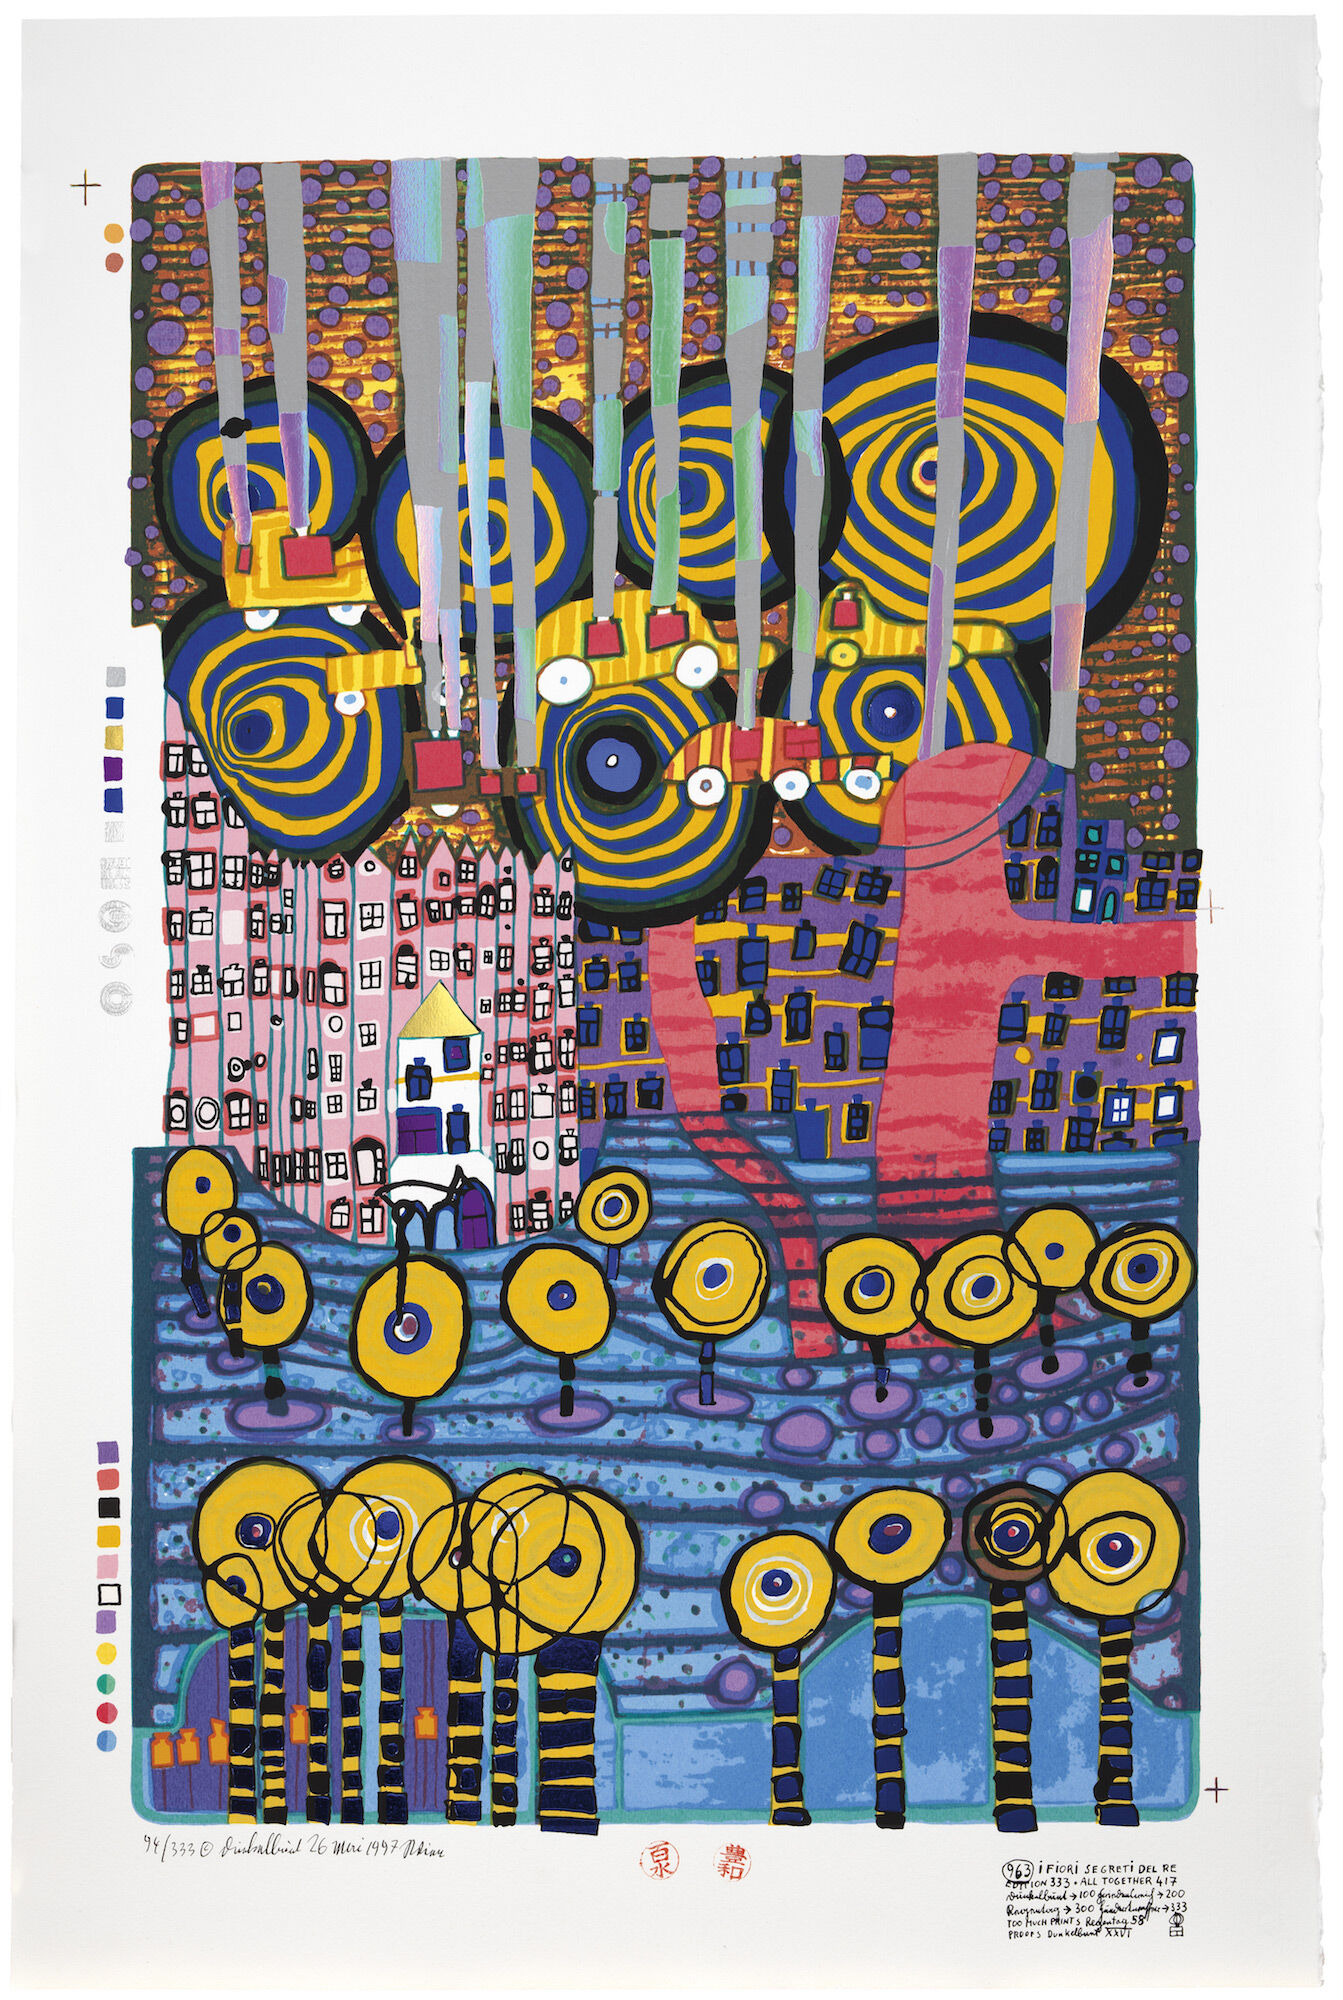 963 I FIORI, SEGRETI DEL REI, LES FLEURS SECRETES DU ROI, DIE GEHEIMEN BLUMEN DES KÖNIGS, SECRET FLOWERS OF THE KING (1997) (screenprint) by Friedensreich Hundertwasser